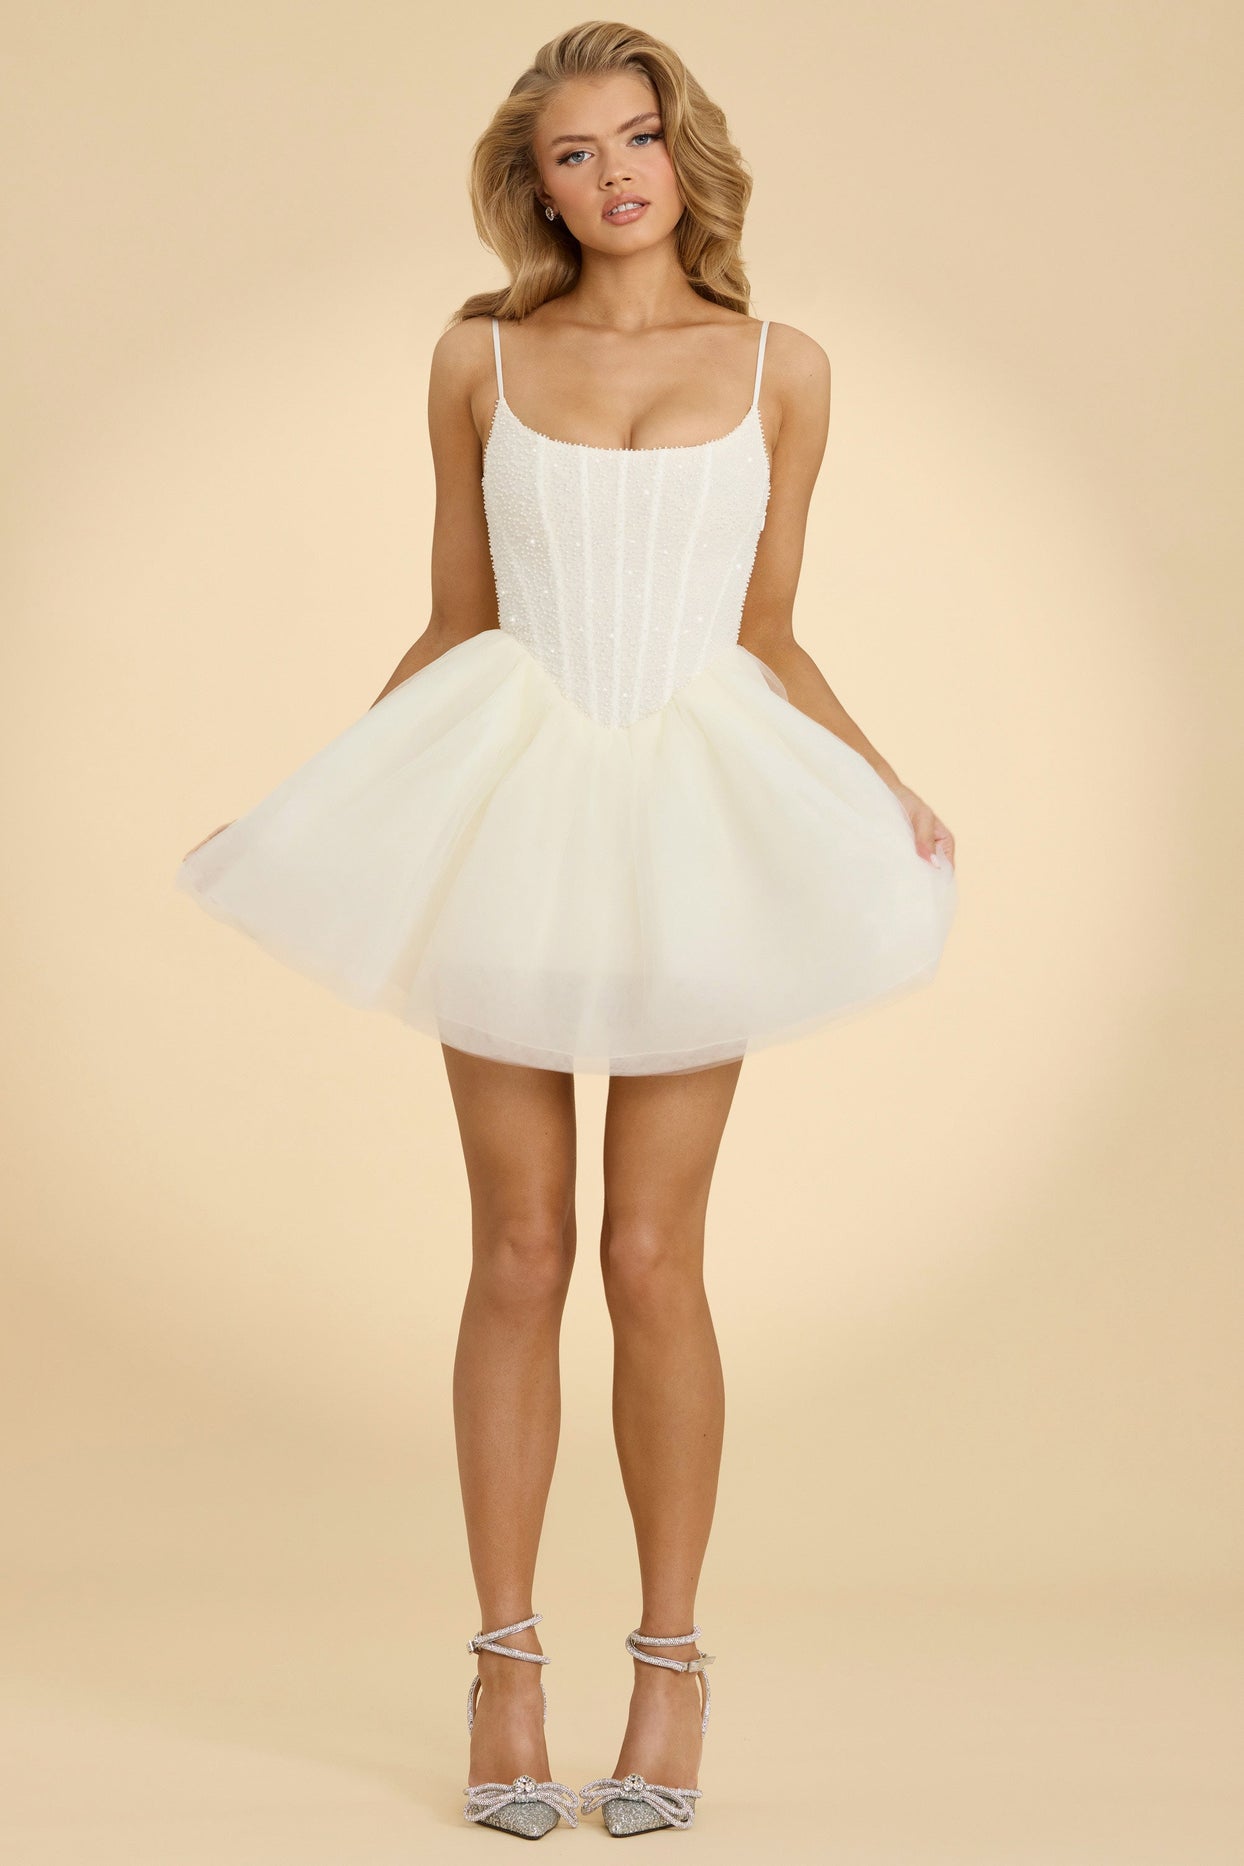 Mini-robe jupe corset en tulle ornée en blanc